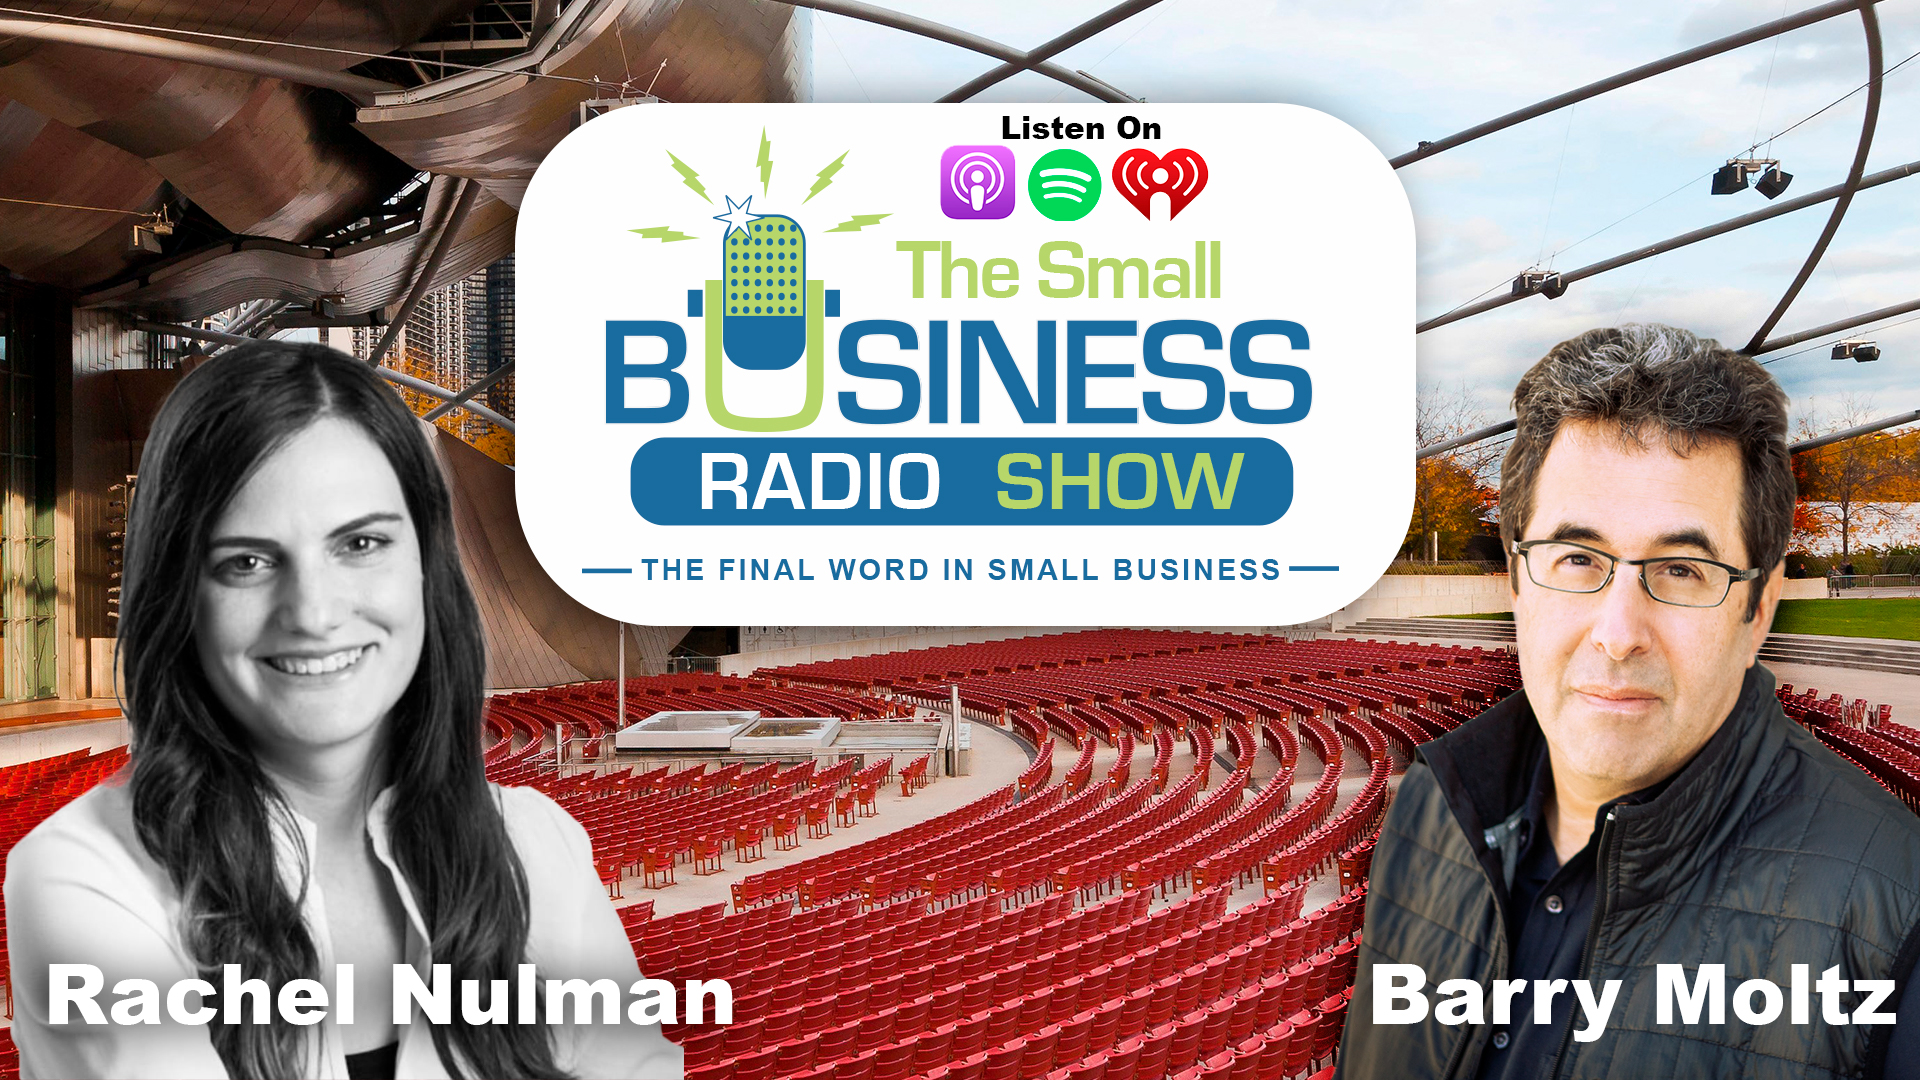 Rachel Nulman on The Small Business Radio Show